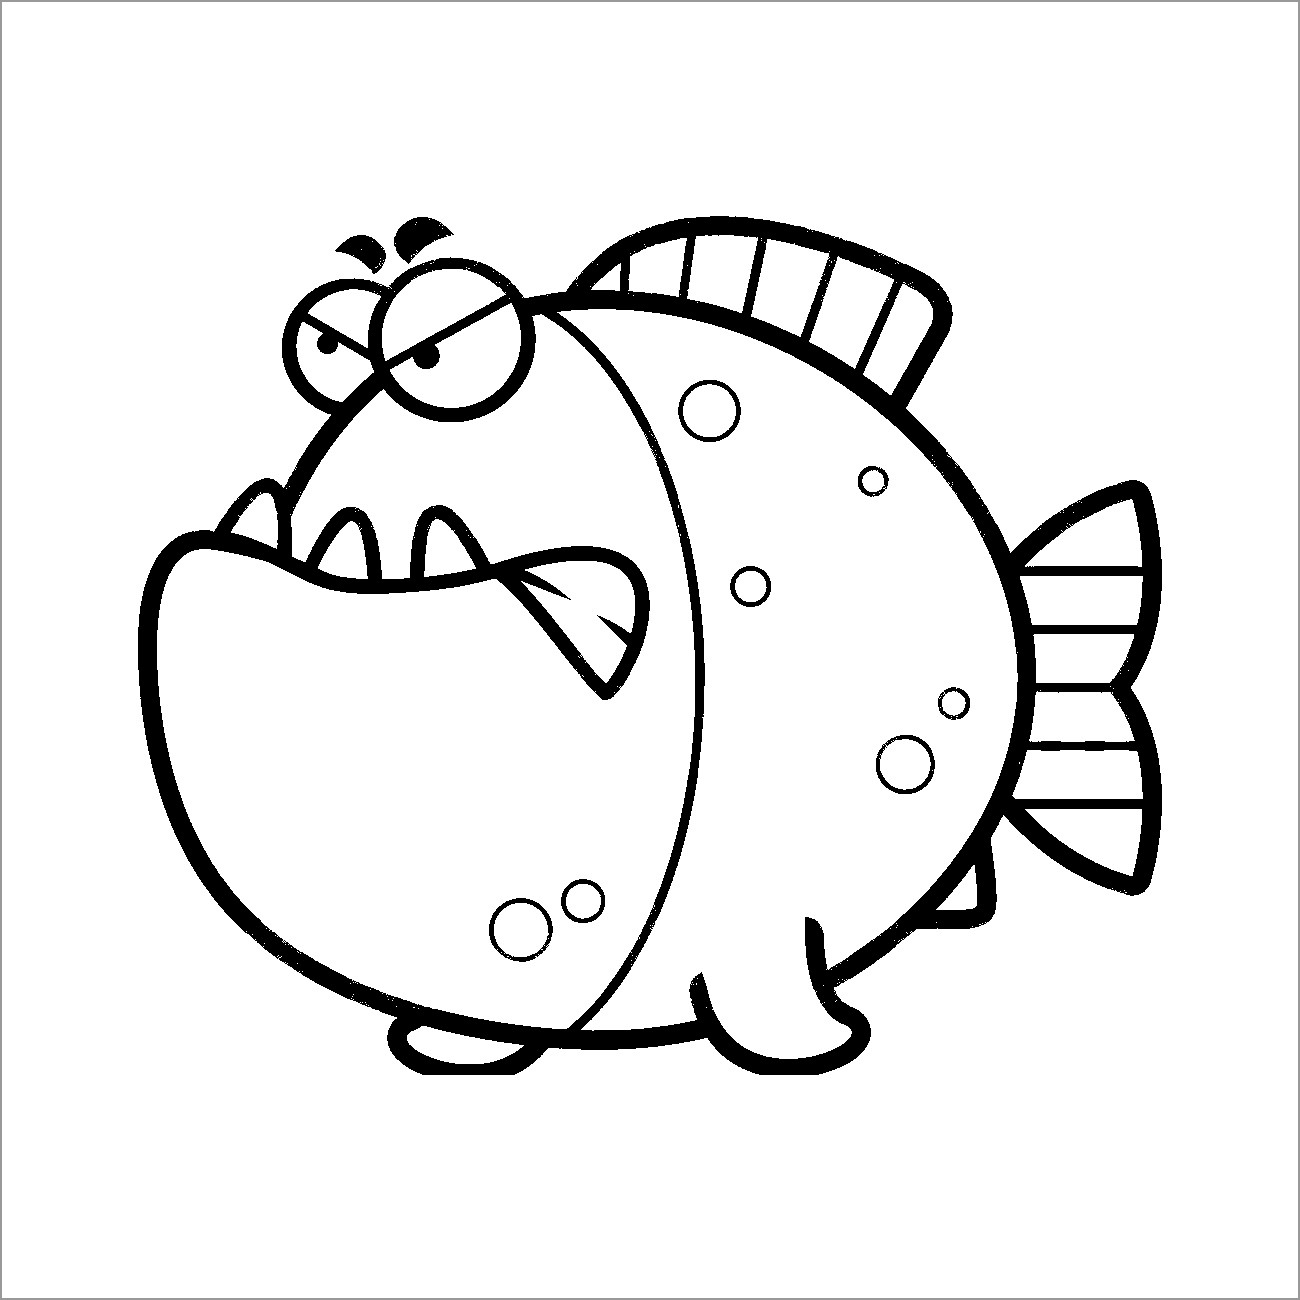 Piranha Coloring Pages - ColoringBay